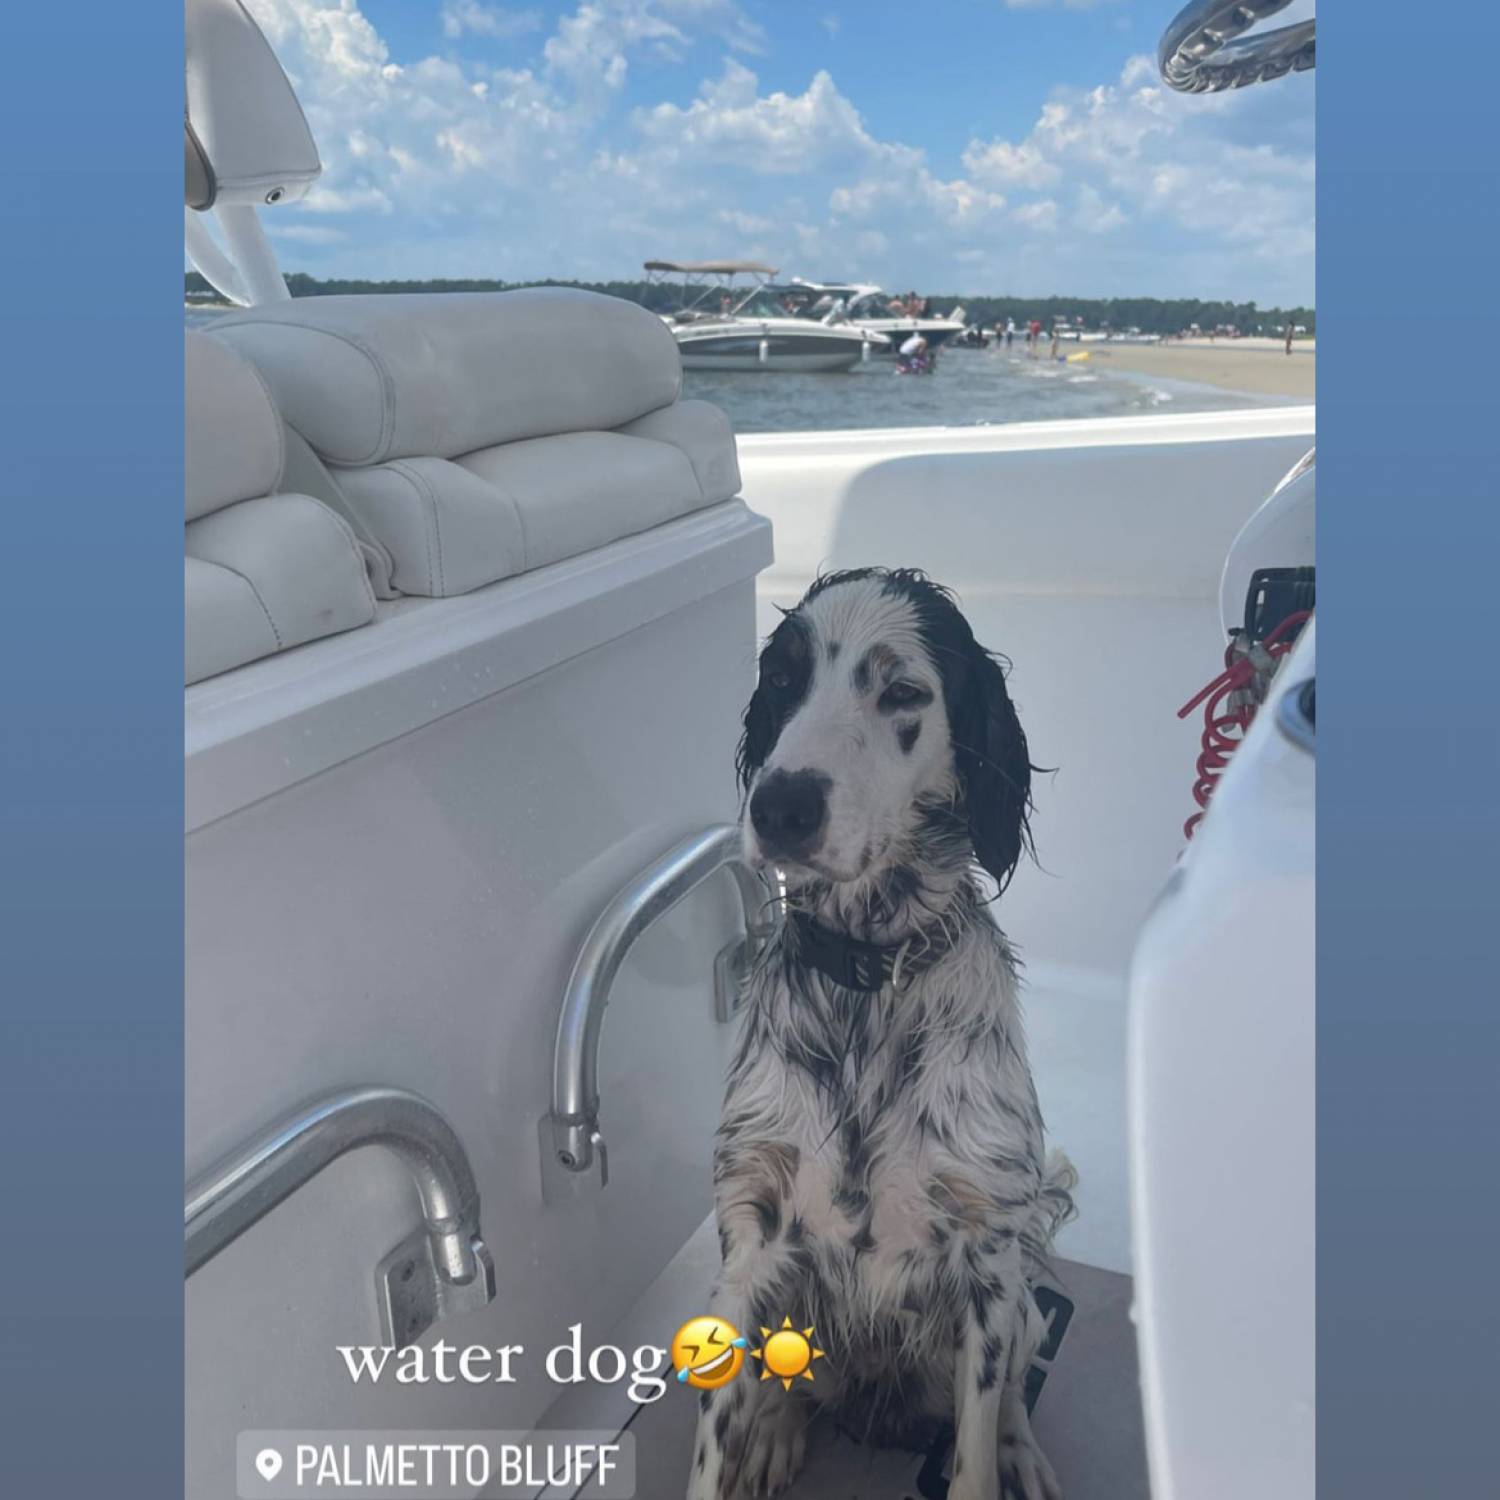 My favorite dog on my favorite boat.